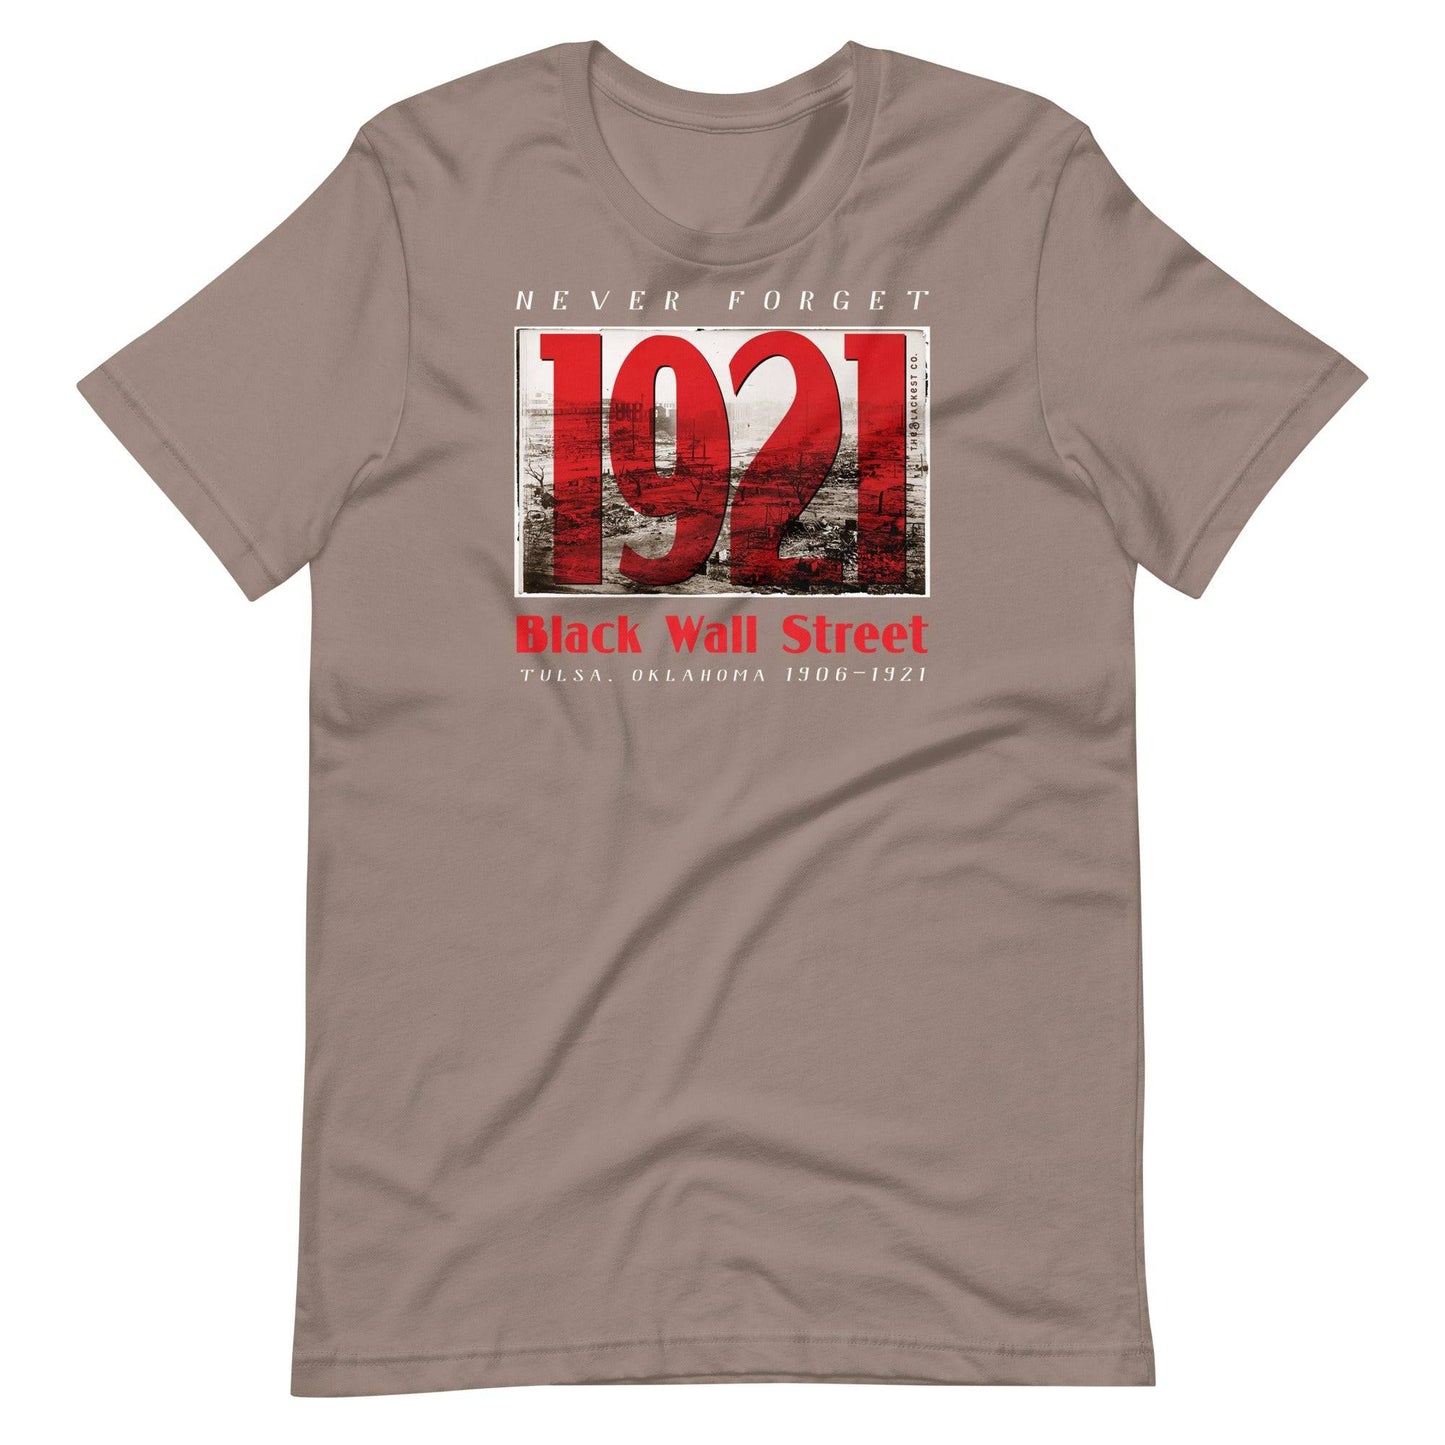 1921 Black Wall Street Red Unisex T-Shirt